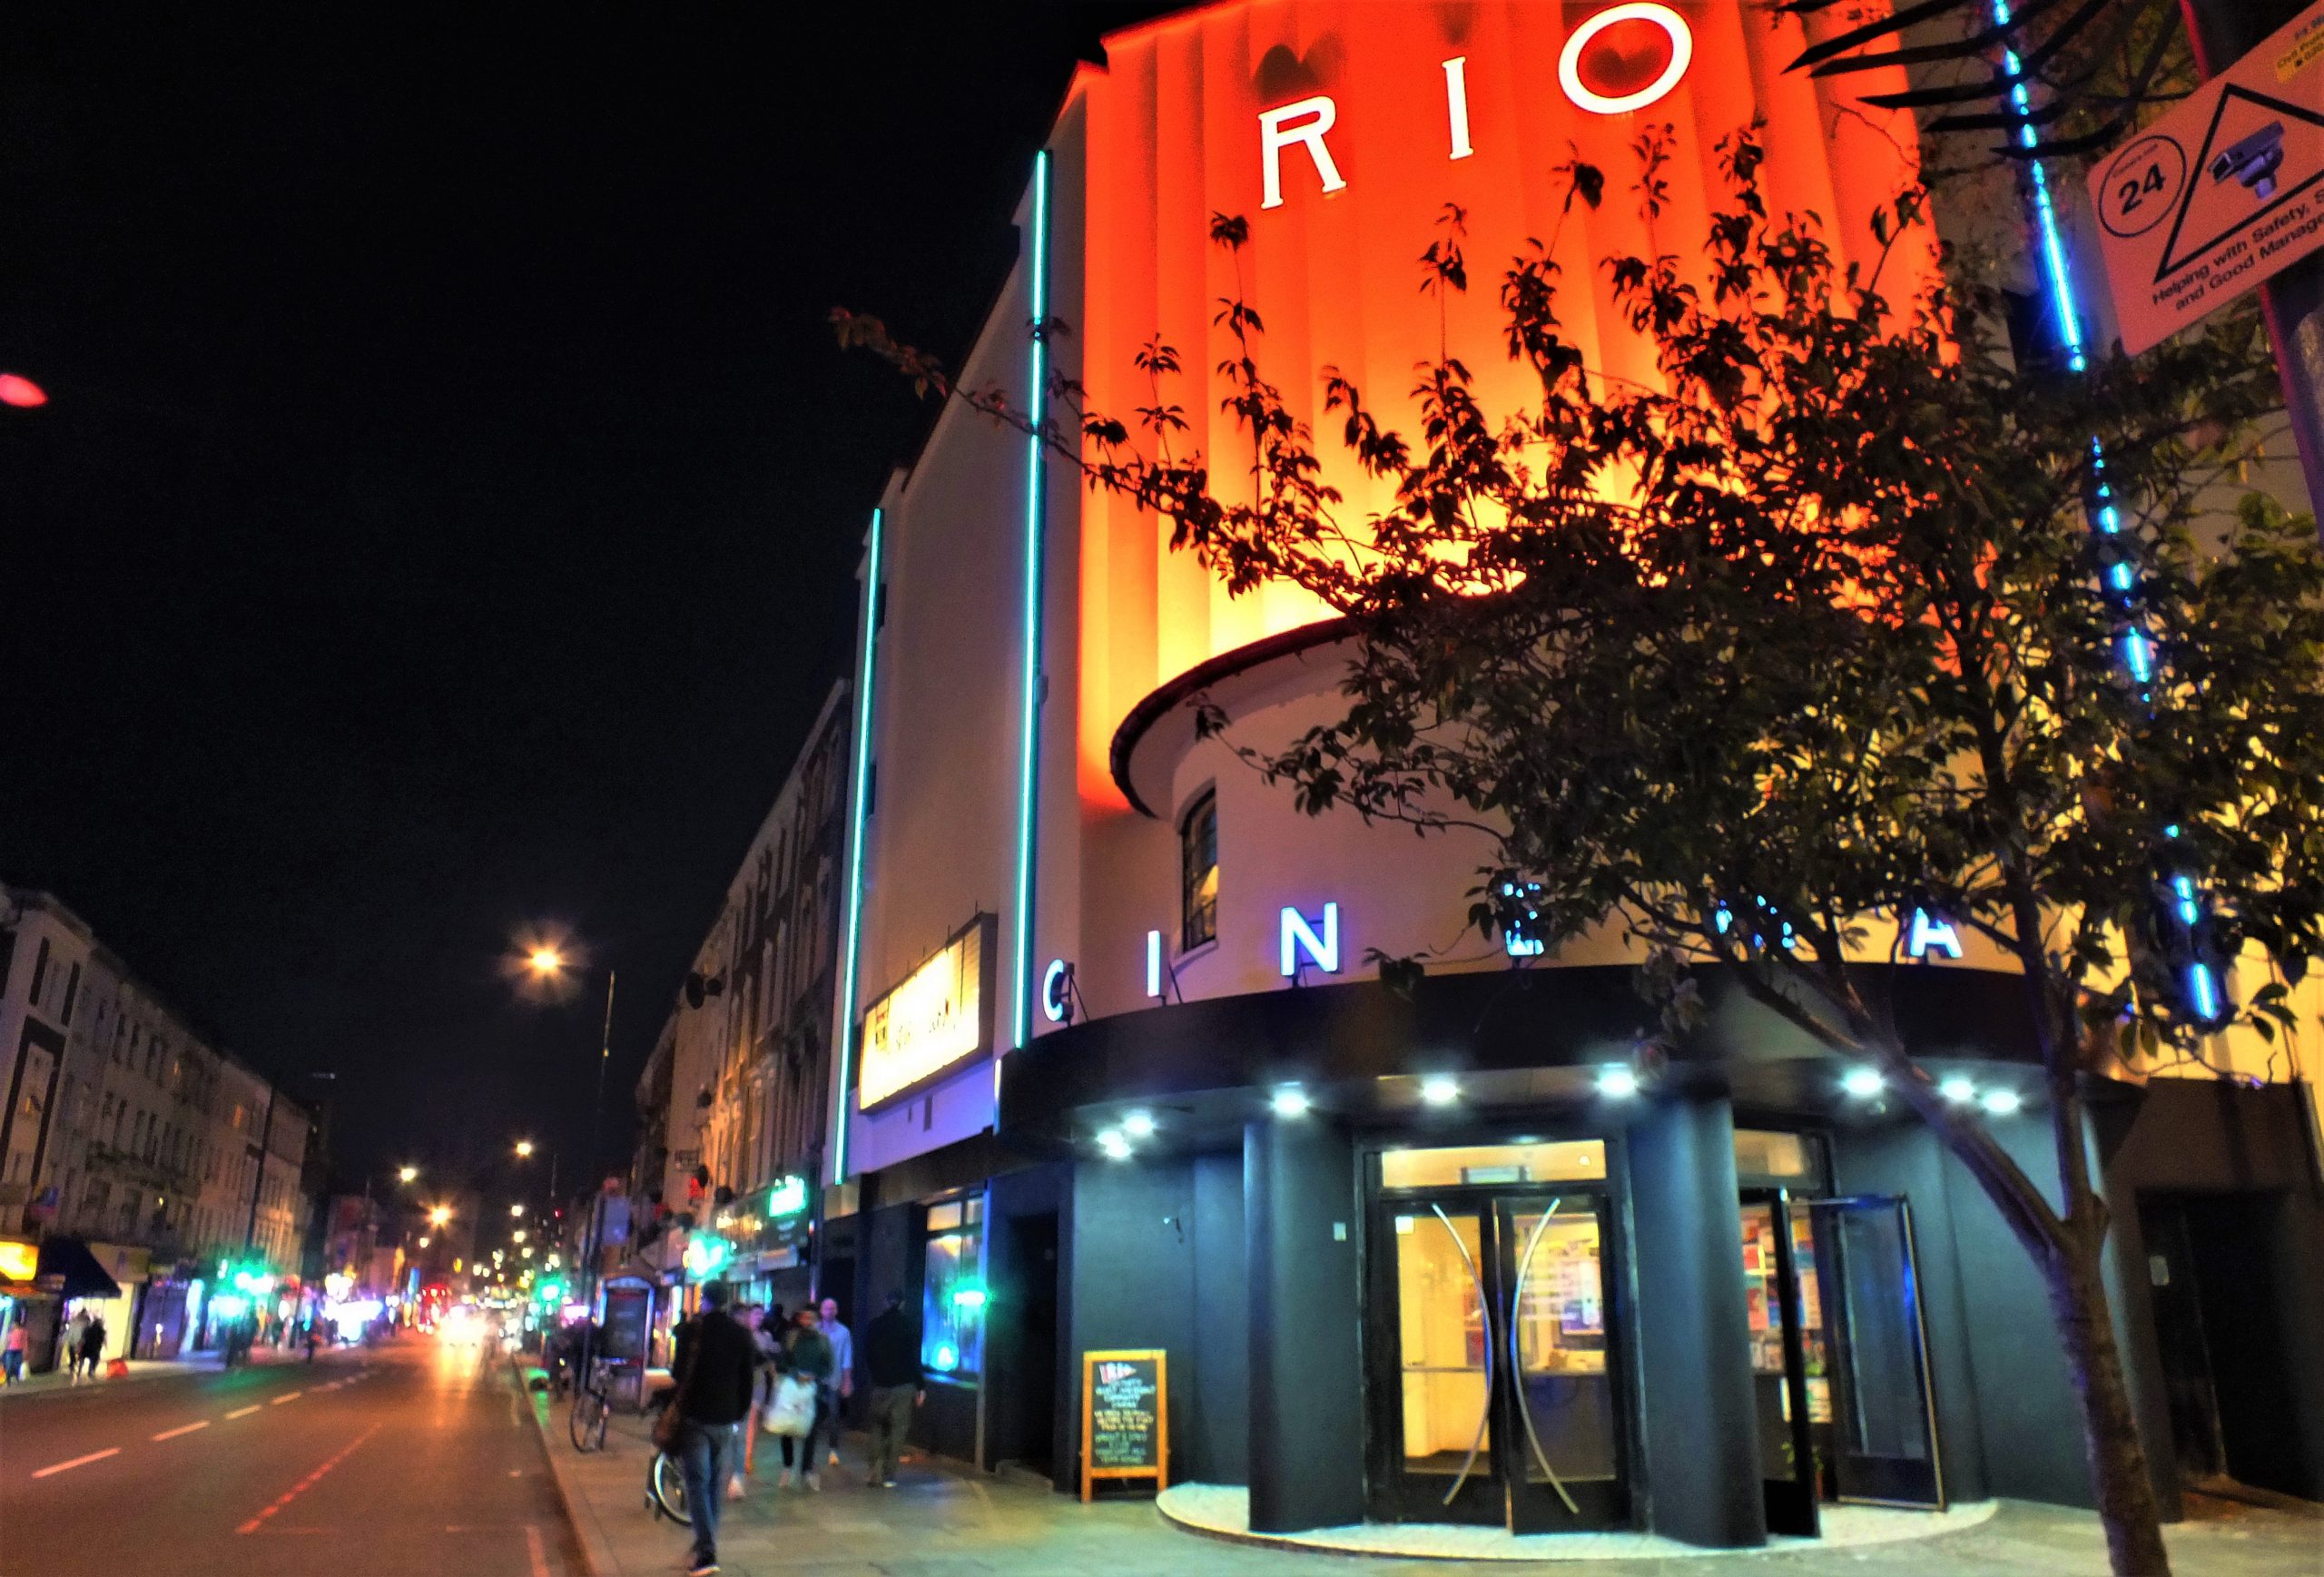 The wonderful facade of the Rio Cinema Dalston